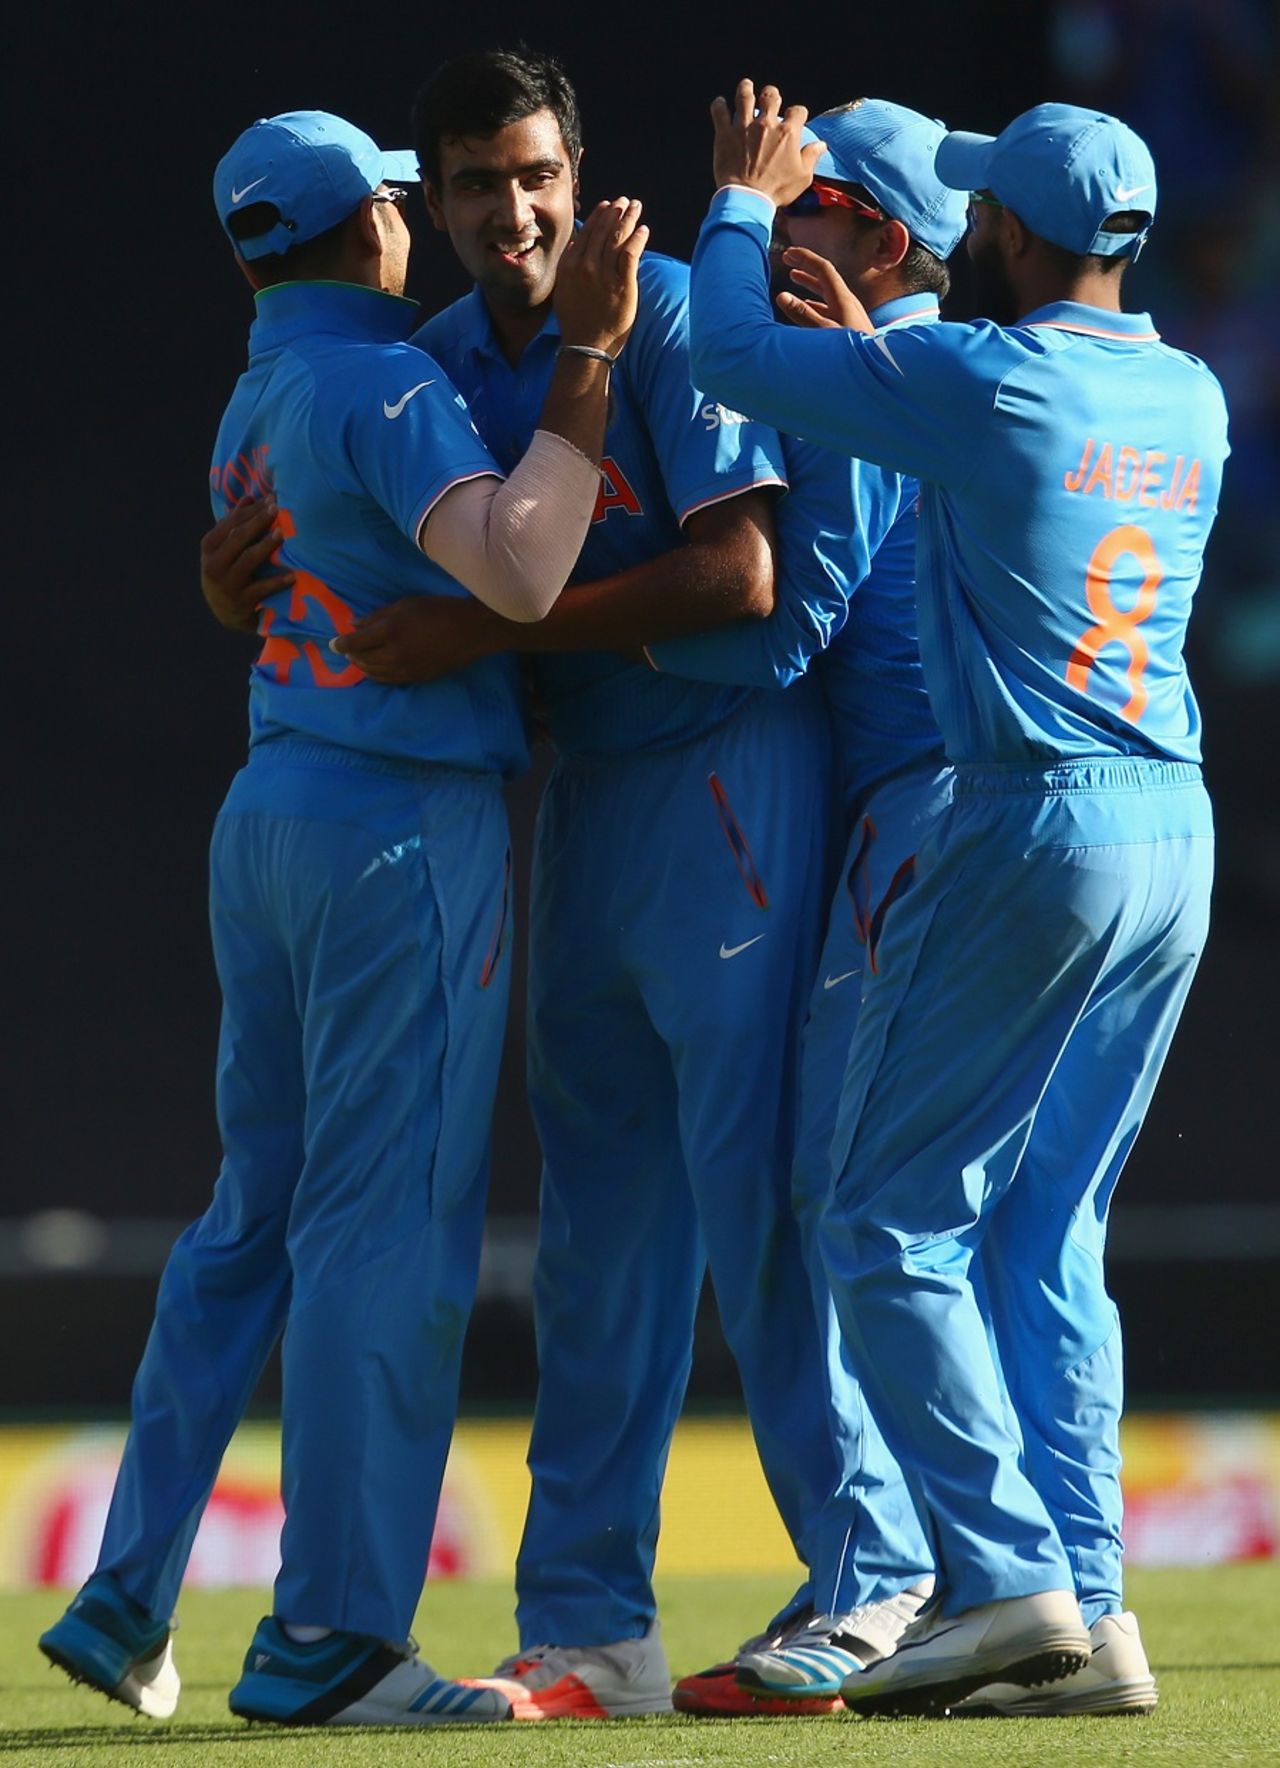 R Ashwin is congratulated on the wicket of Glenn Maxwell, Australia v India, World Cup 2015, 2nd semi-final, Sydney, March 26, 2015